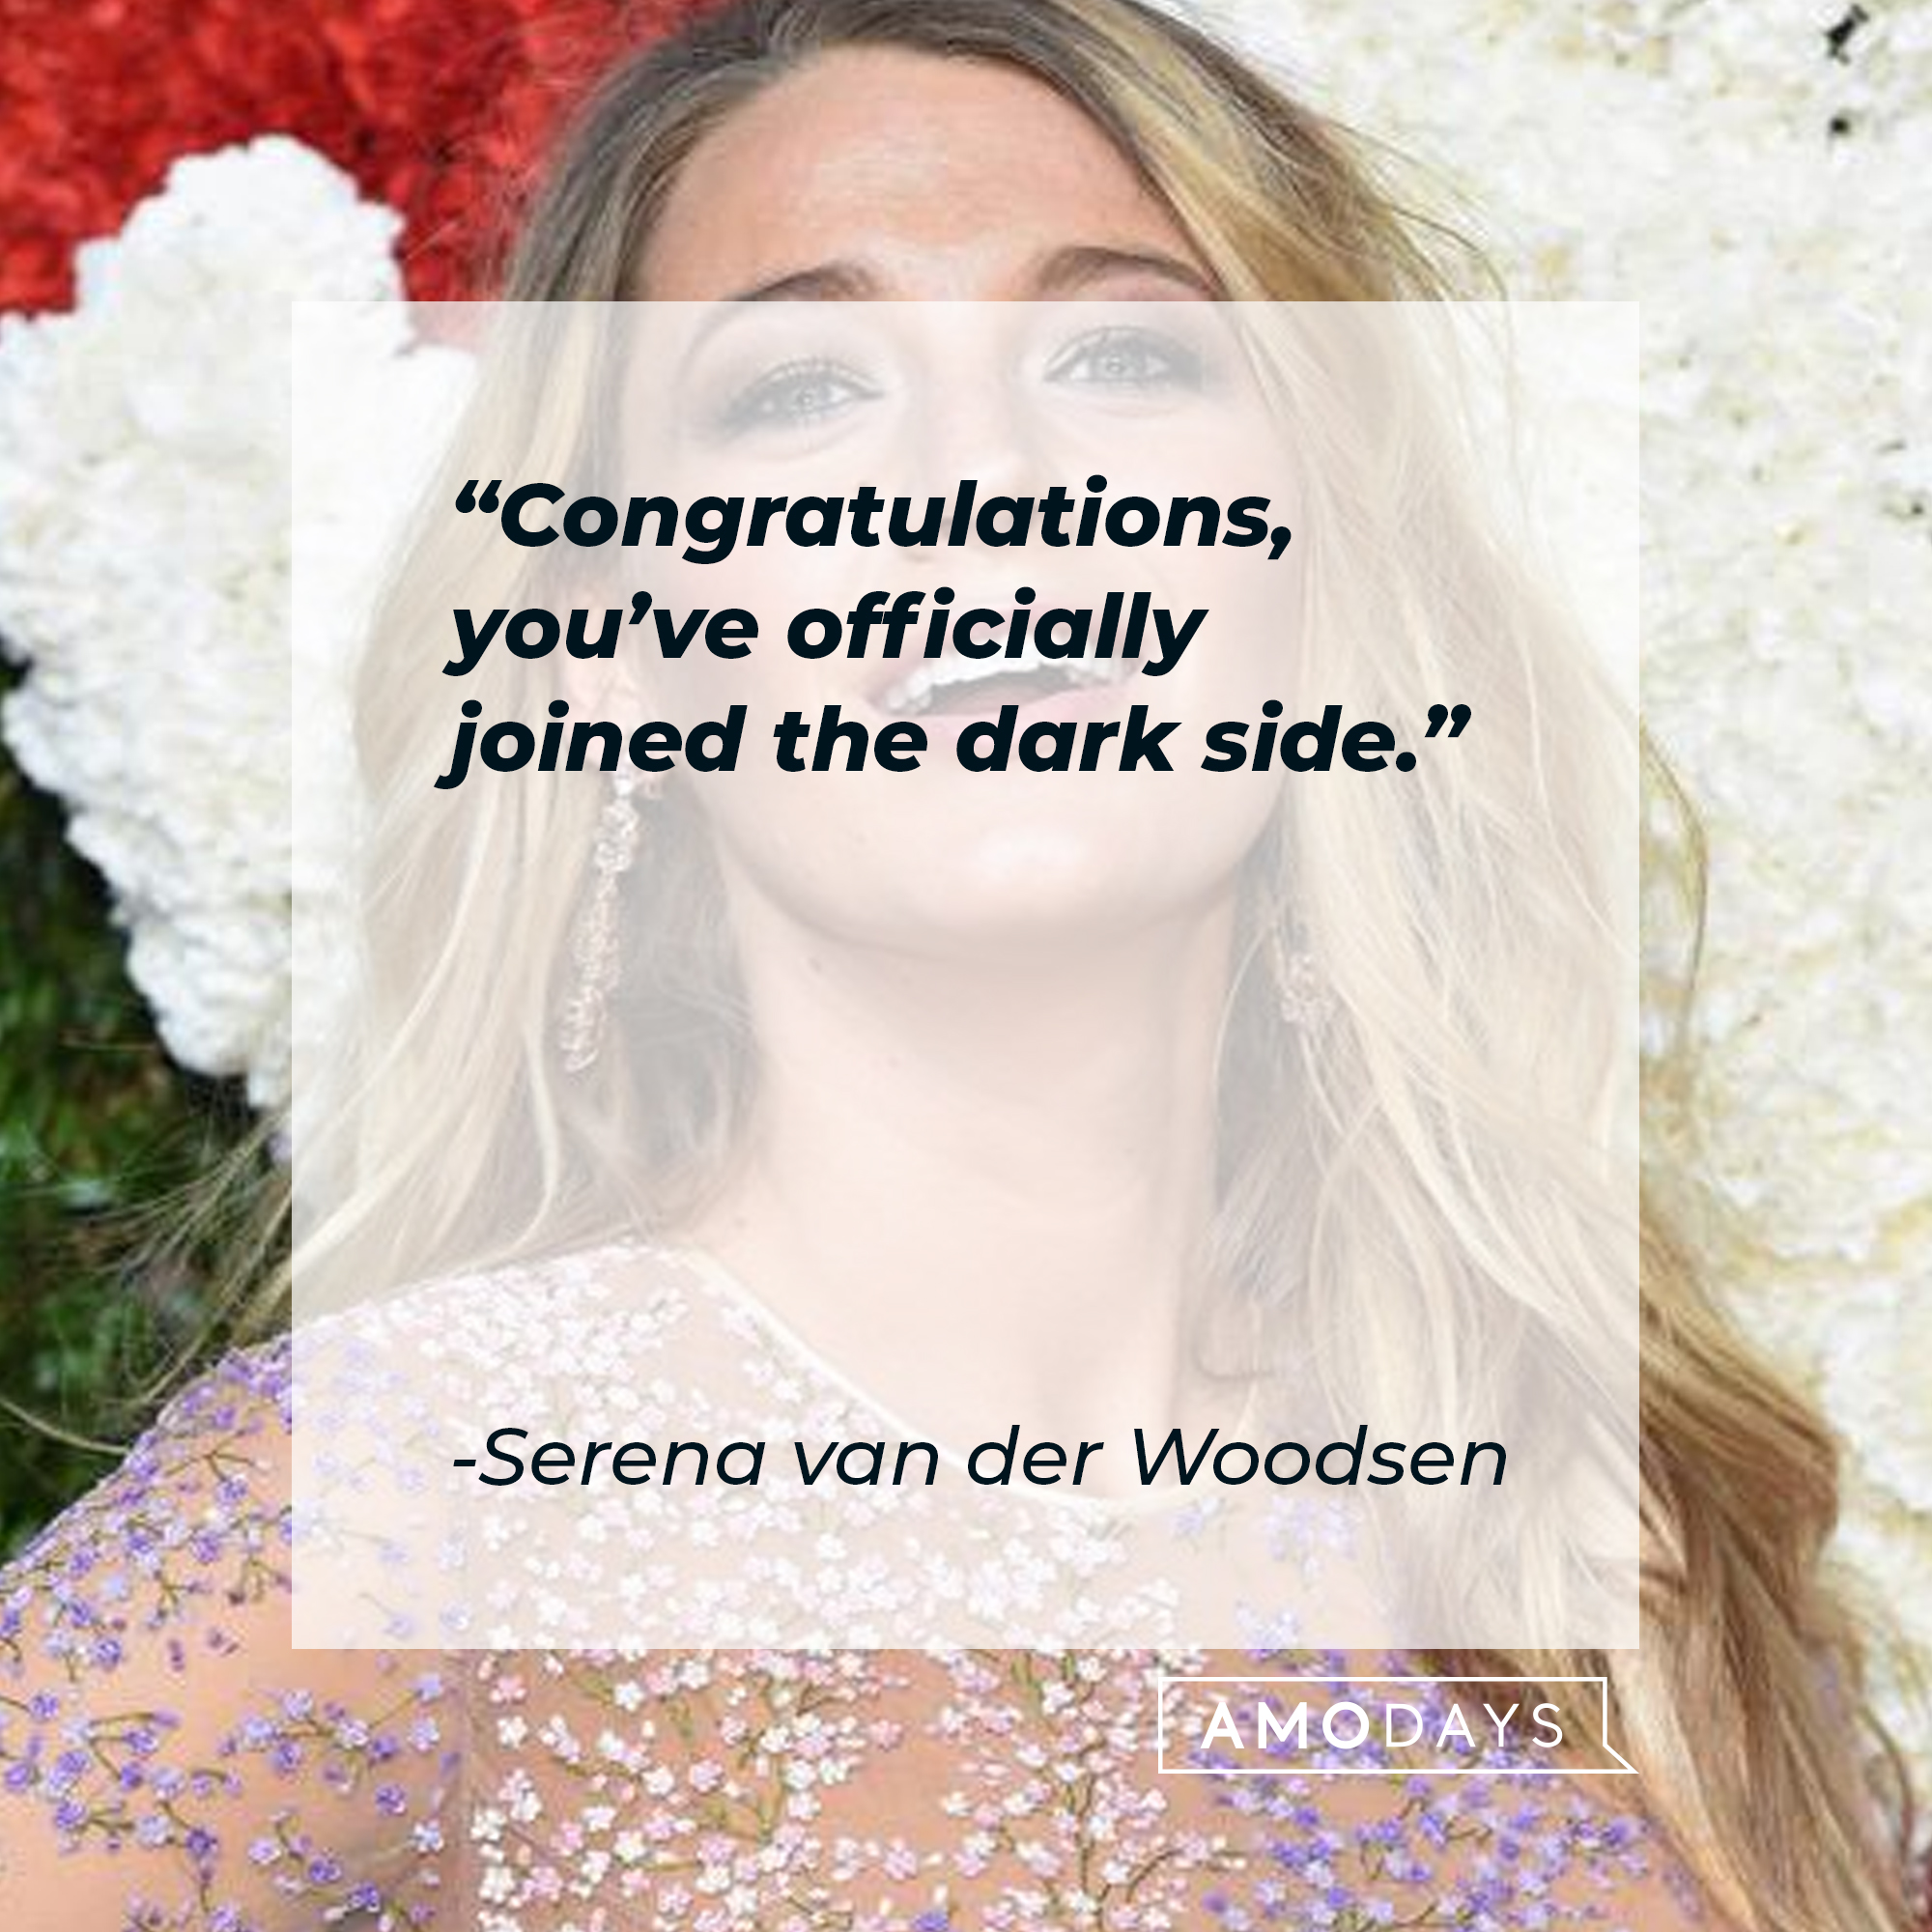 Serena van der Woodsen, with her quote: “Congratulations, you’ve officially joined the dark side.” | Source: Facebook.com/GossipGirl